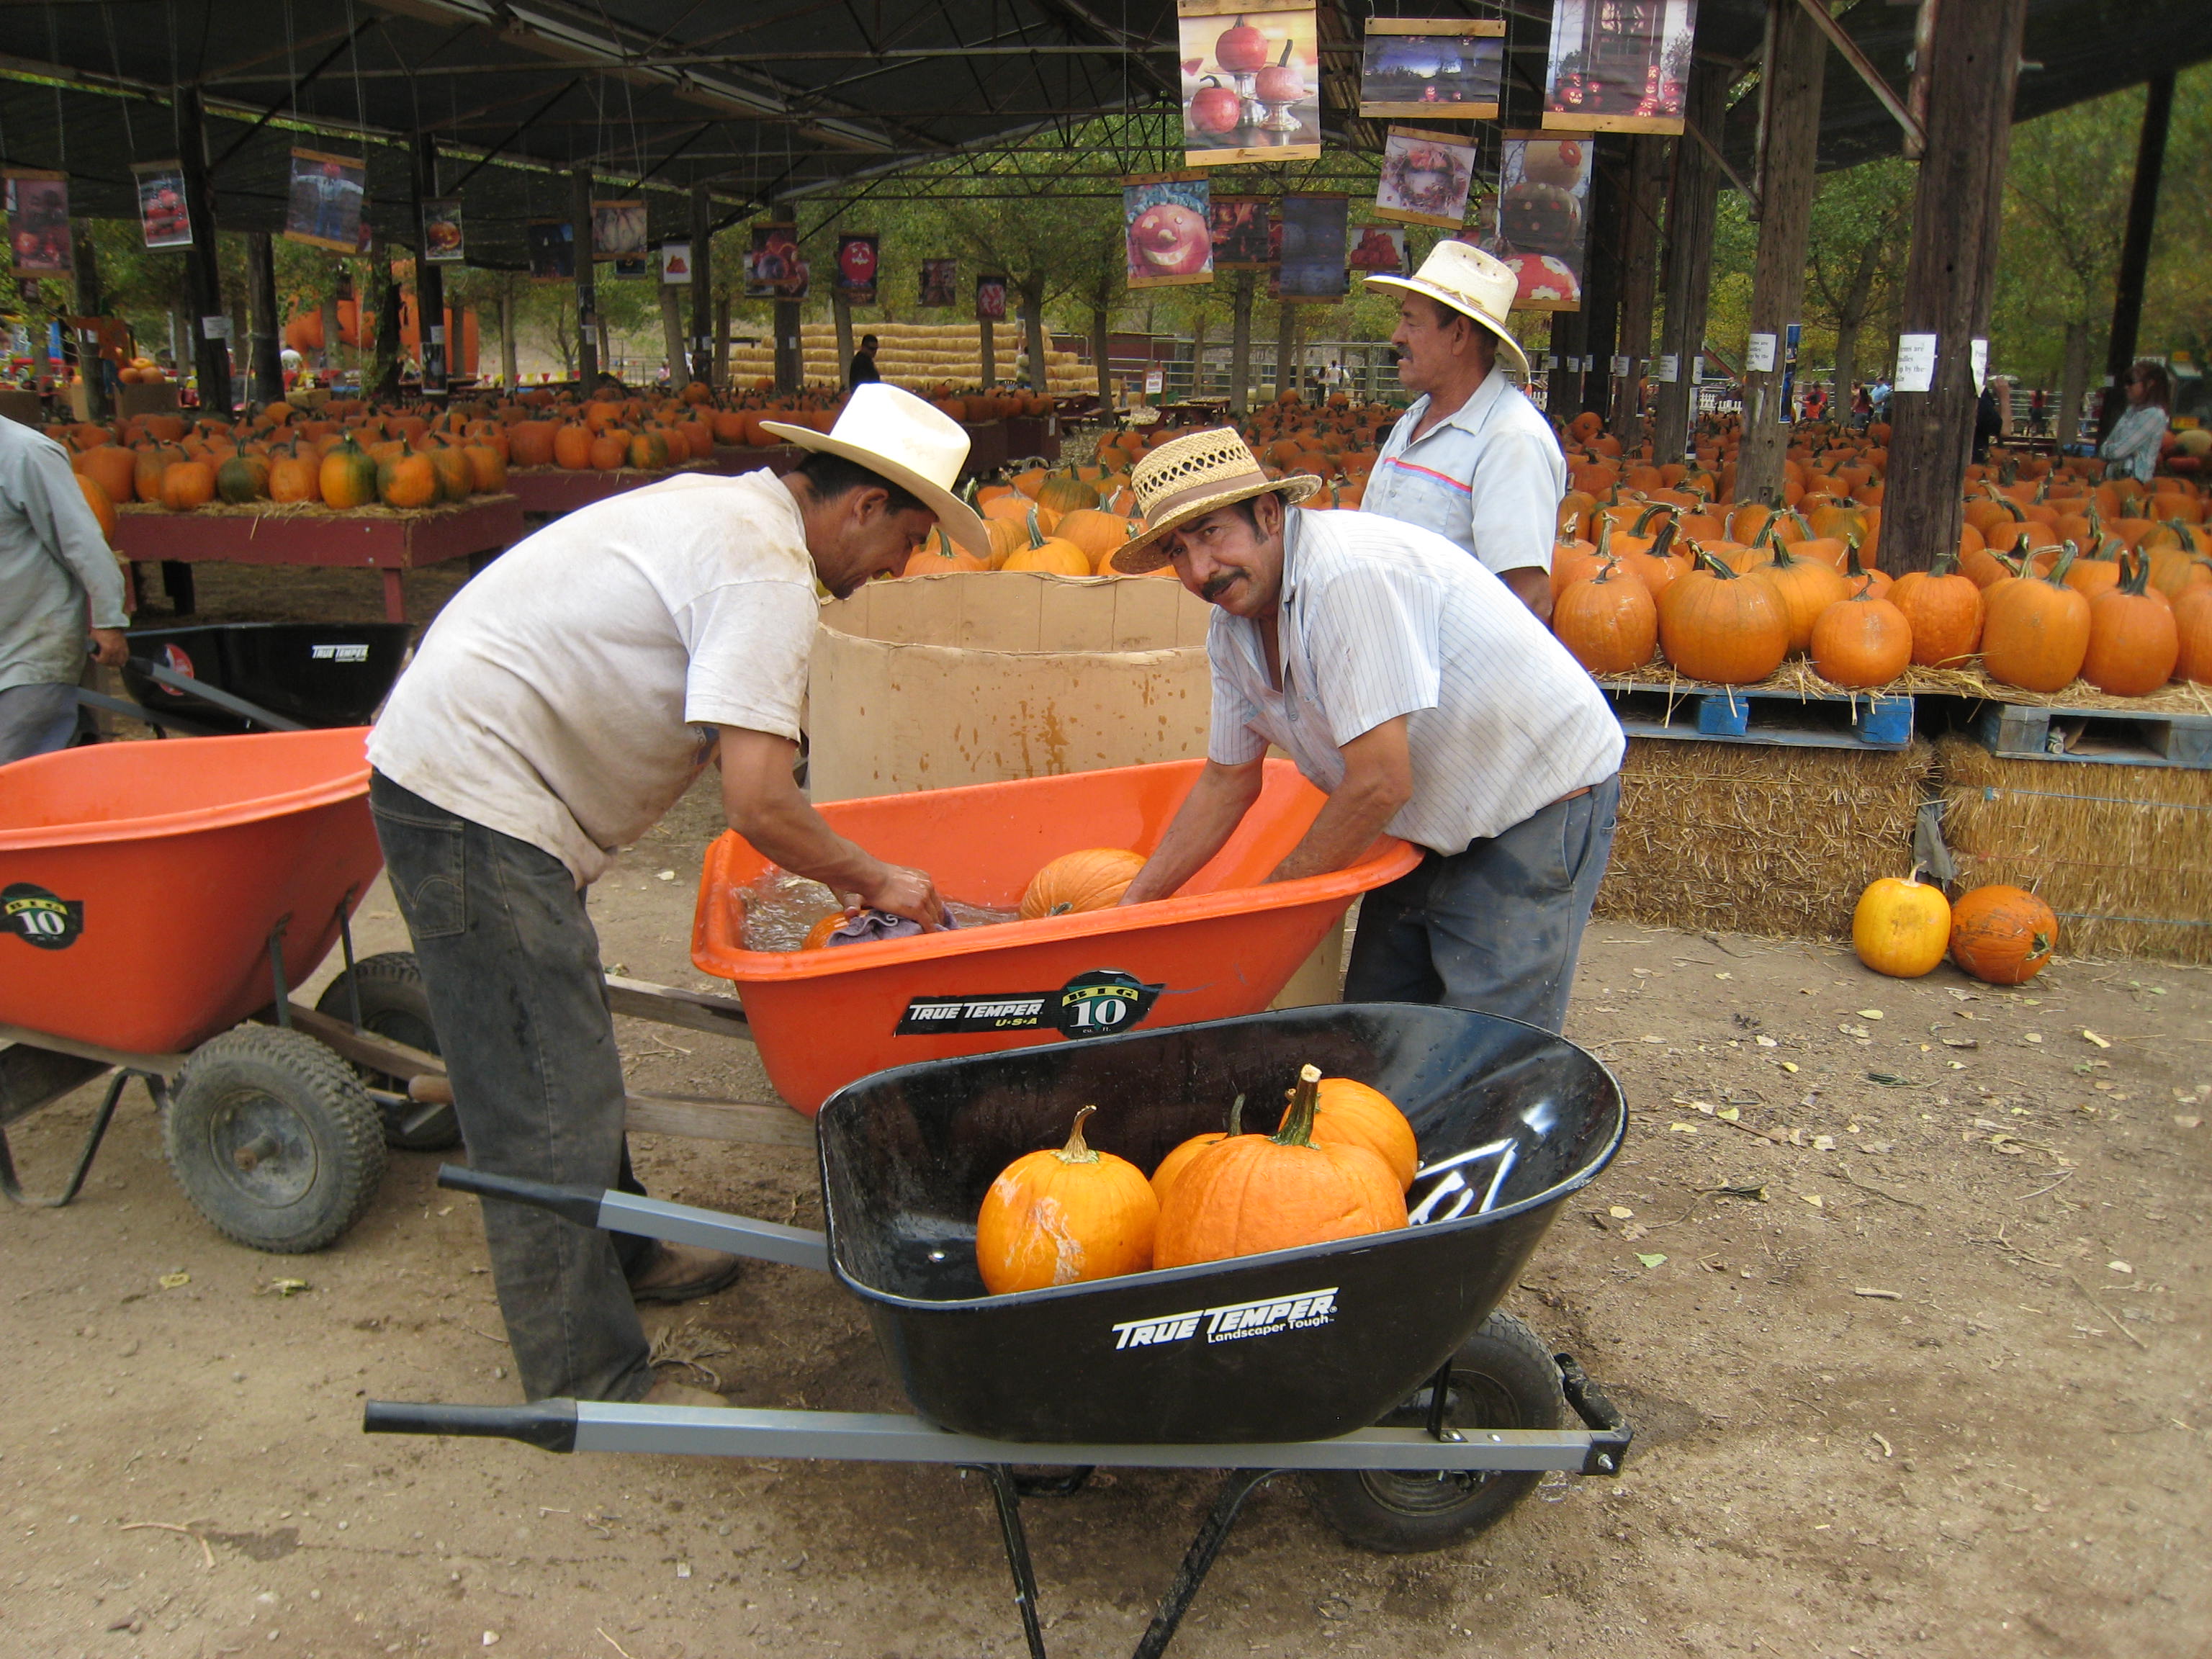 Mexican Laborers at a Pumpkin Patch, Yucaipa, California